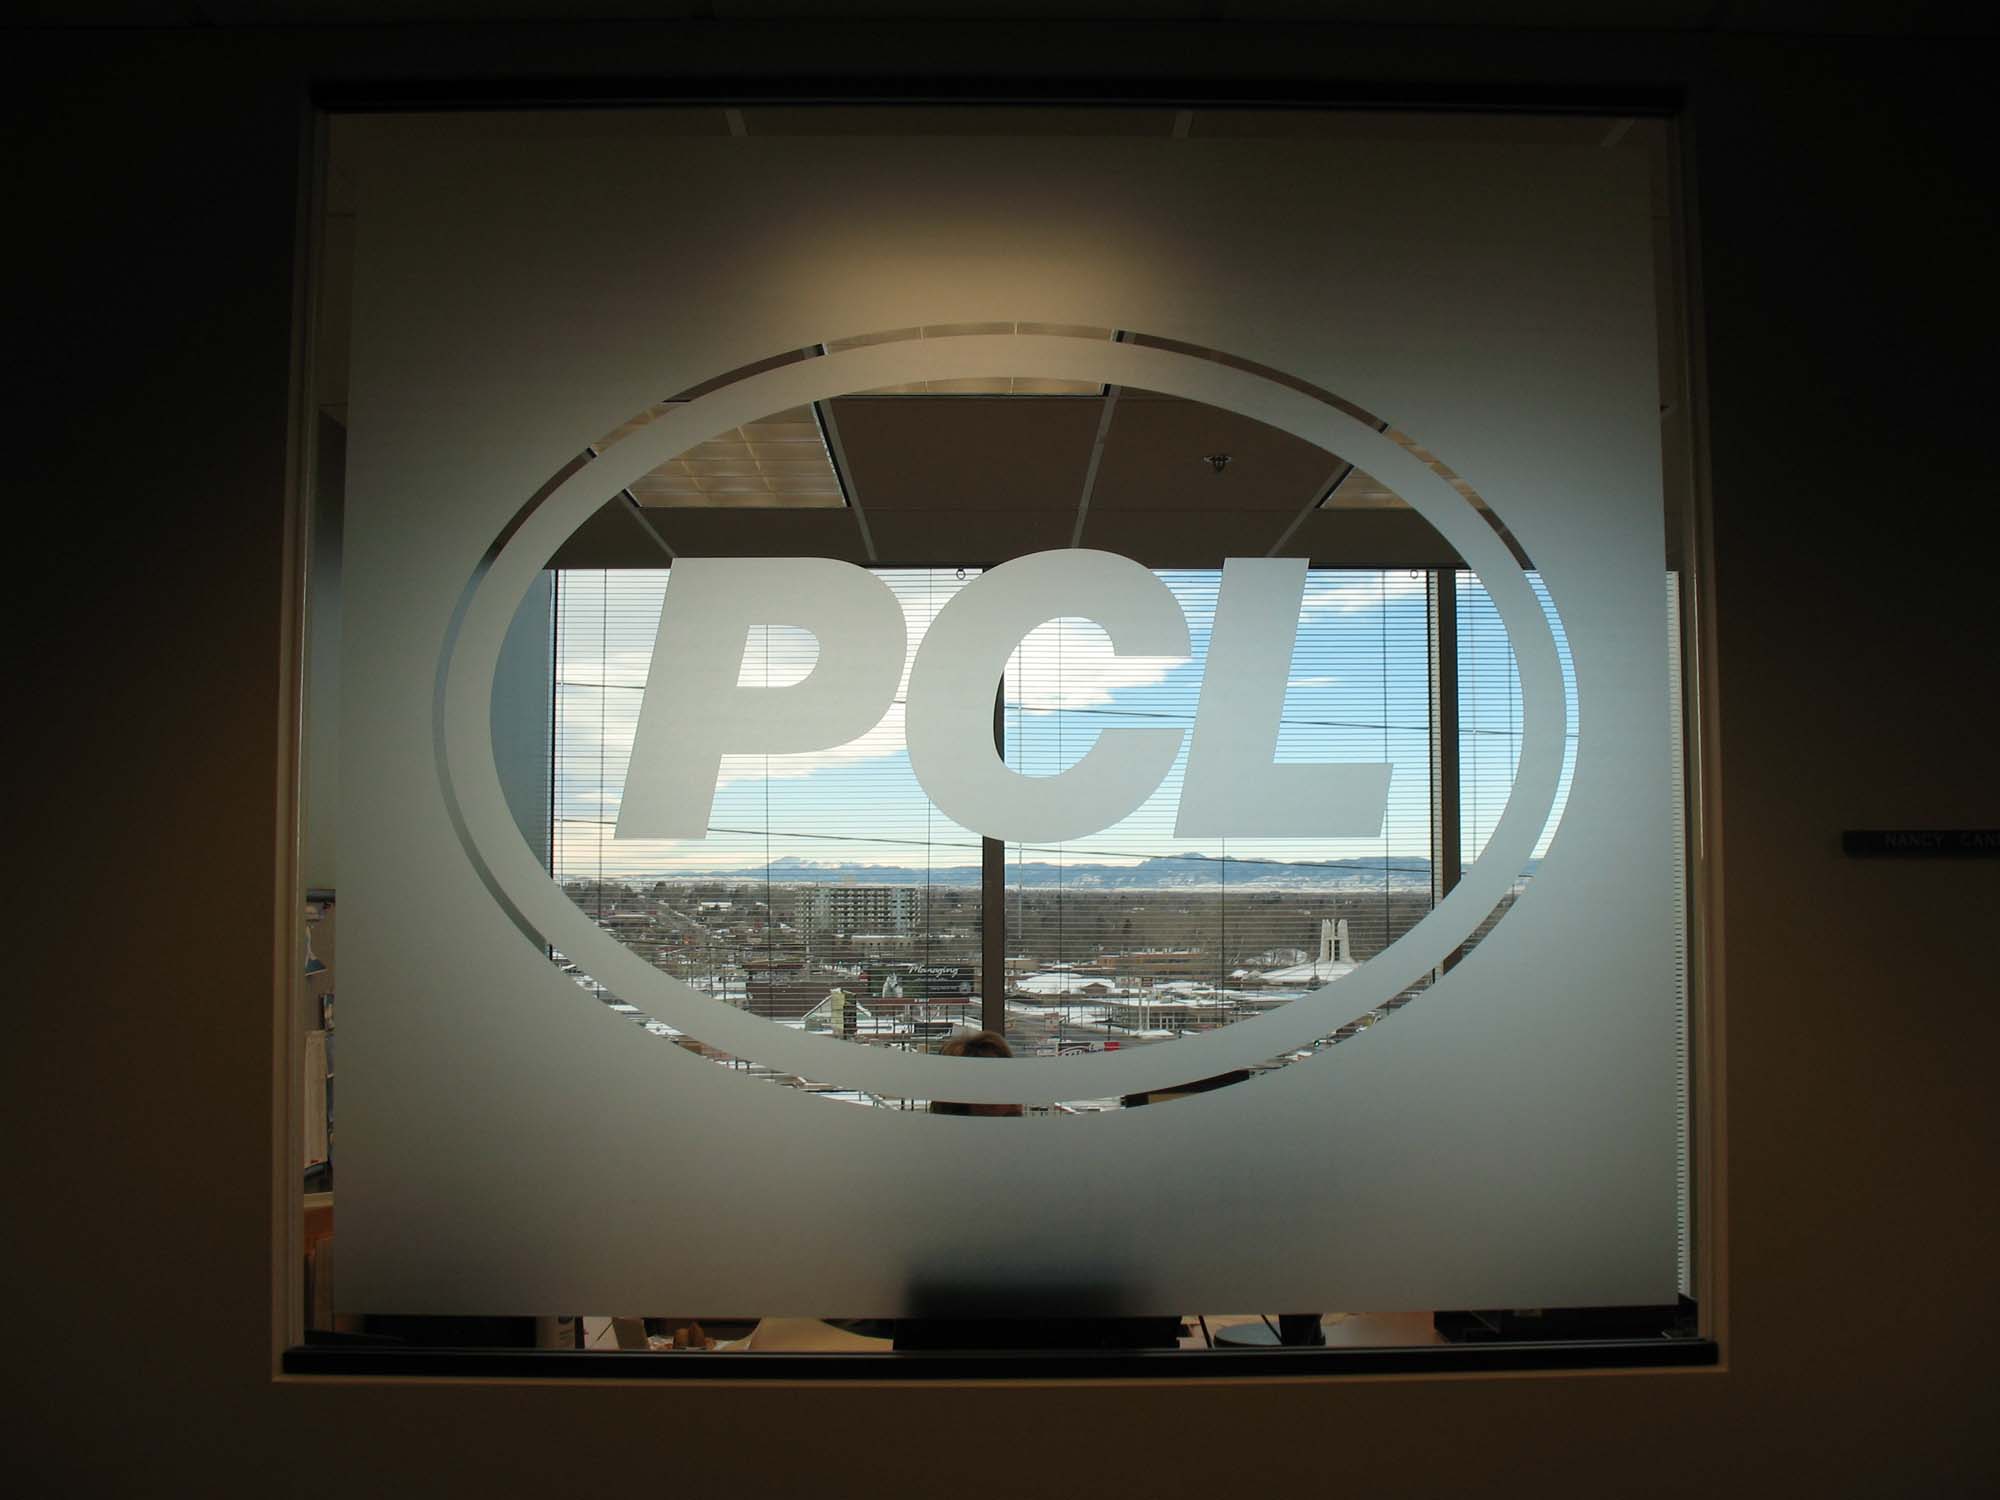 PCL branding decorative window film